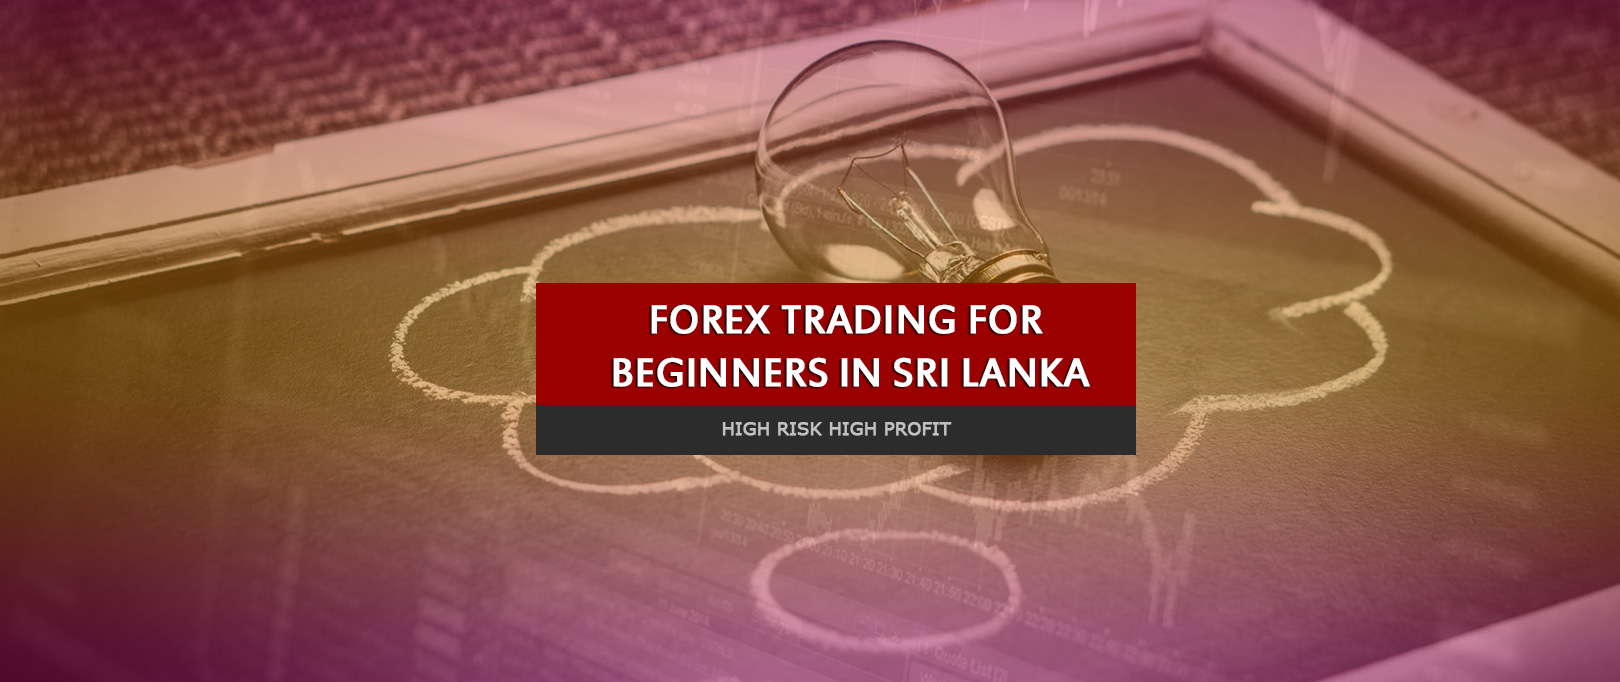 Forex trading in sri lanka legal